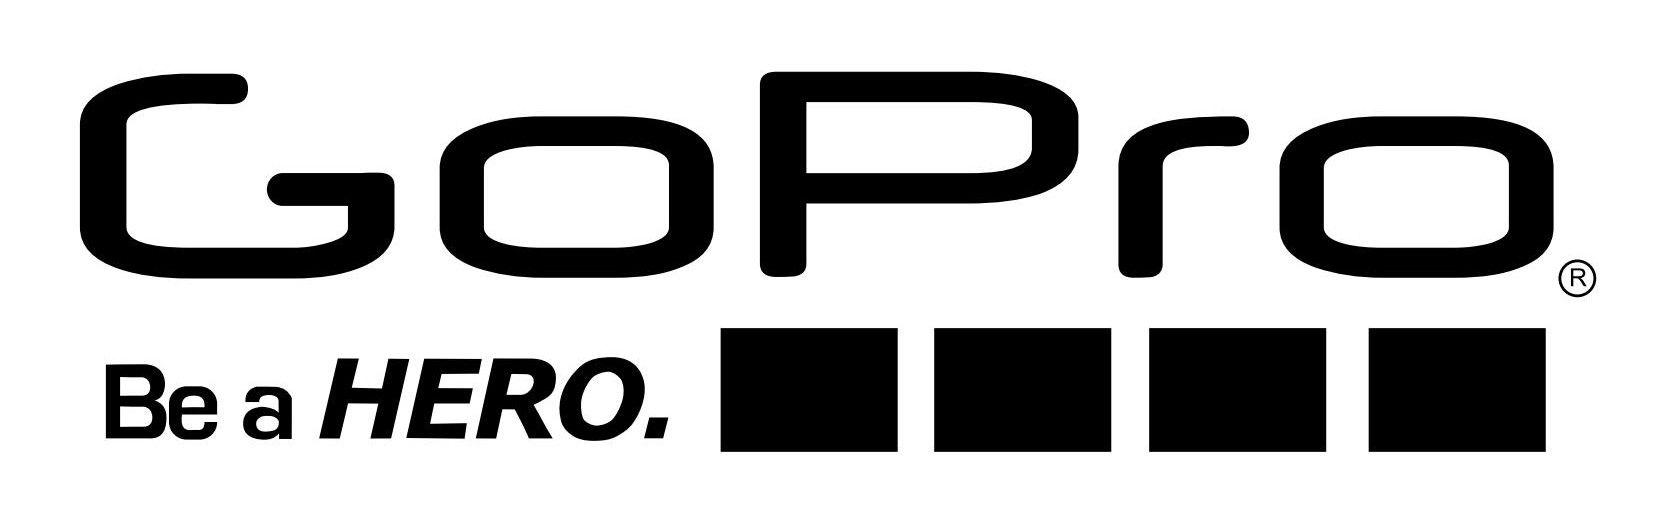 GoPro Logo - GoPro Logo Emblems, Company Logo Downloads